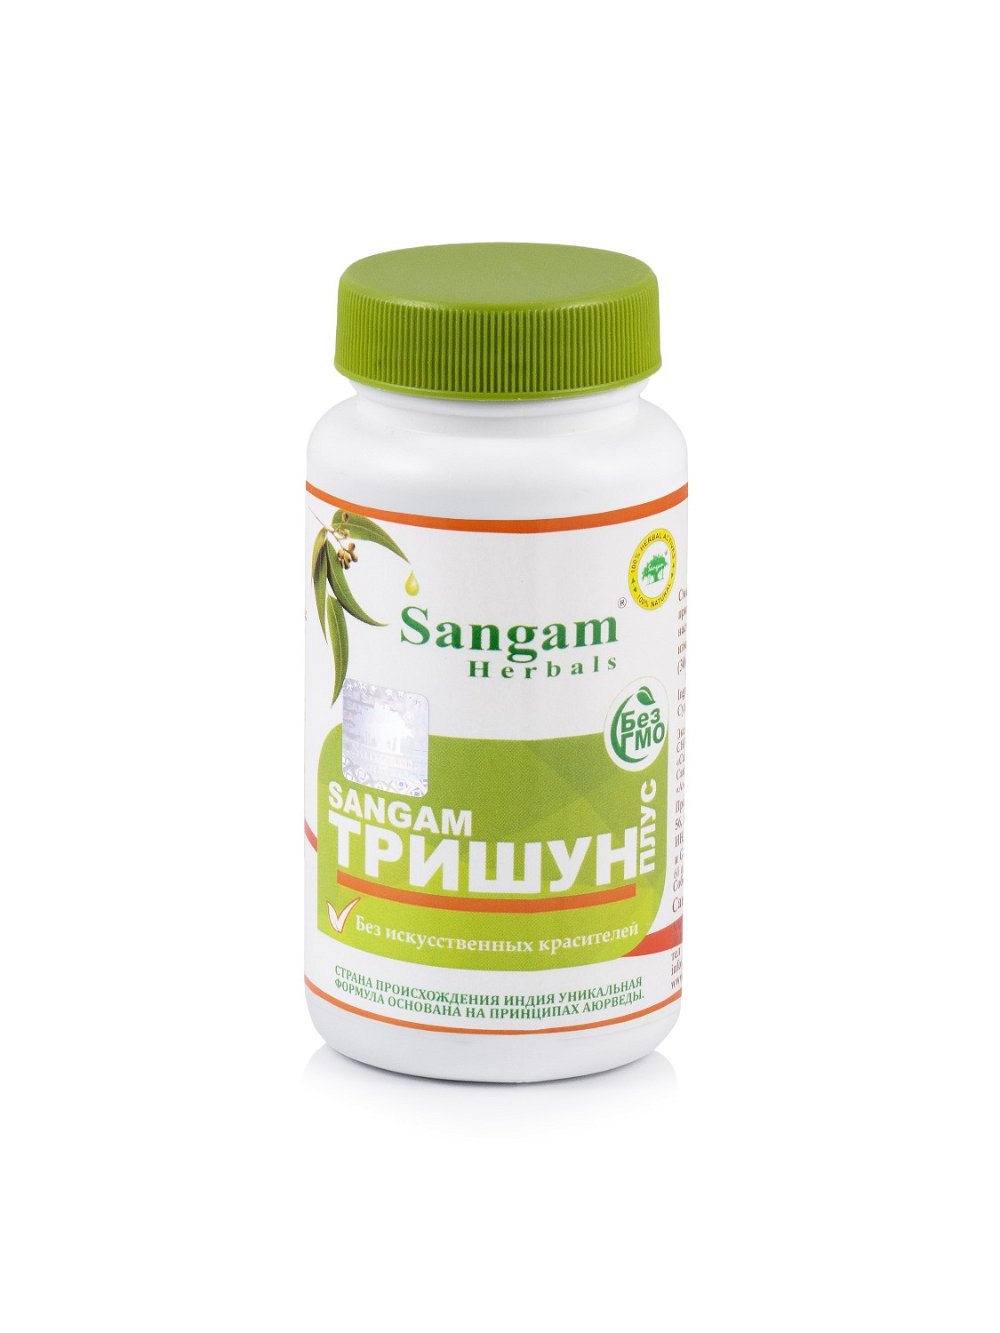 Тришун Sangam Herbals (30 таблеток), 